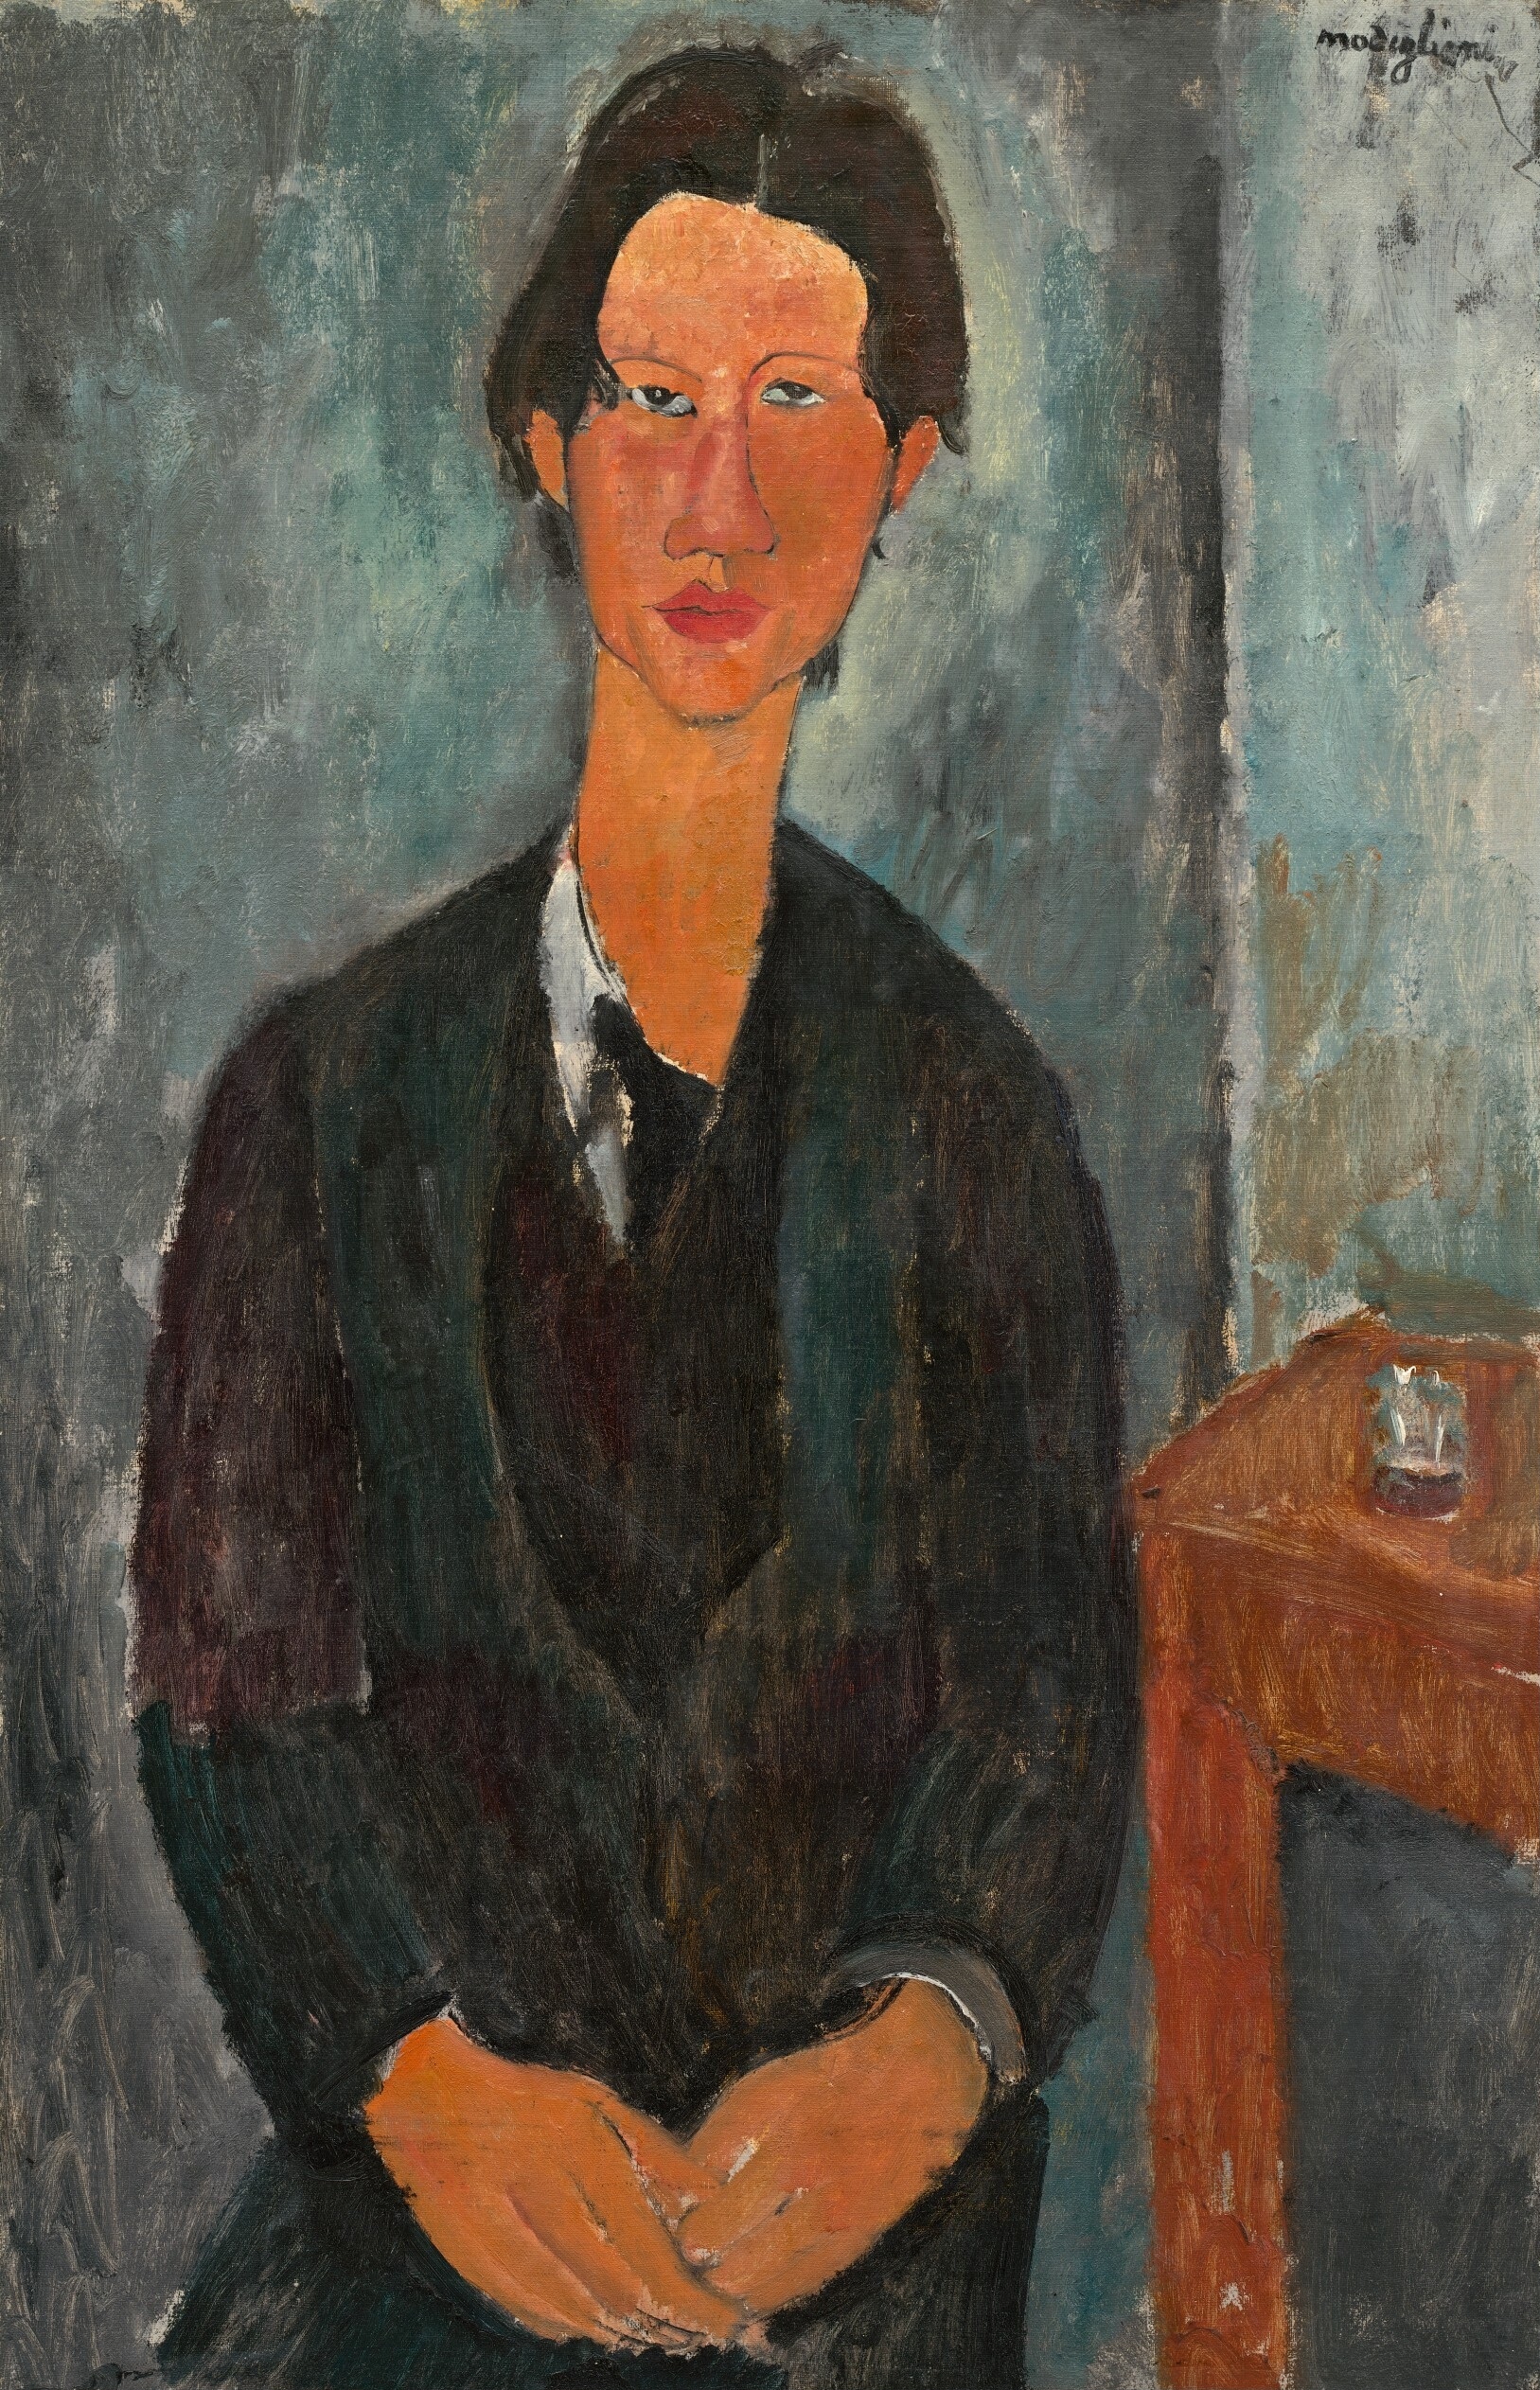 Amedeo Modigliani, Chaim Soutine, Italian, 1884 - 1920, 1917, oil on canvas, Chester Dale Collection